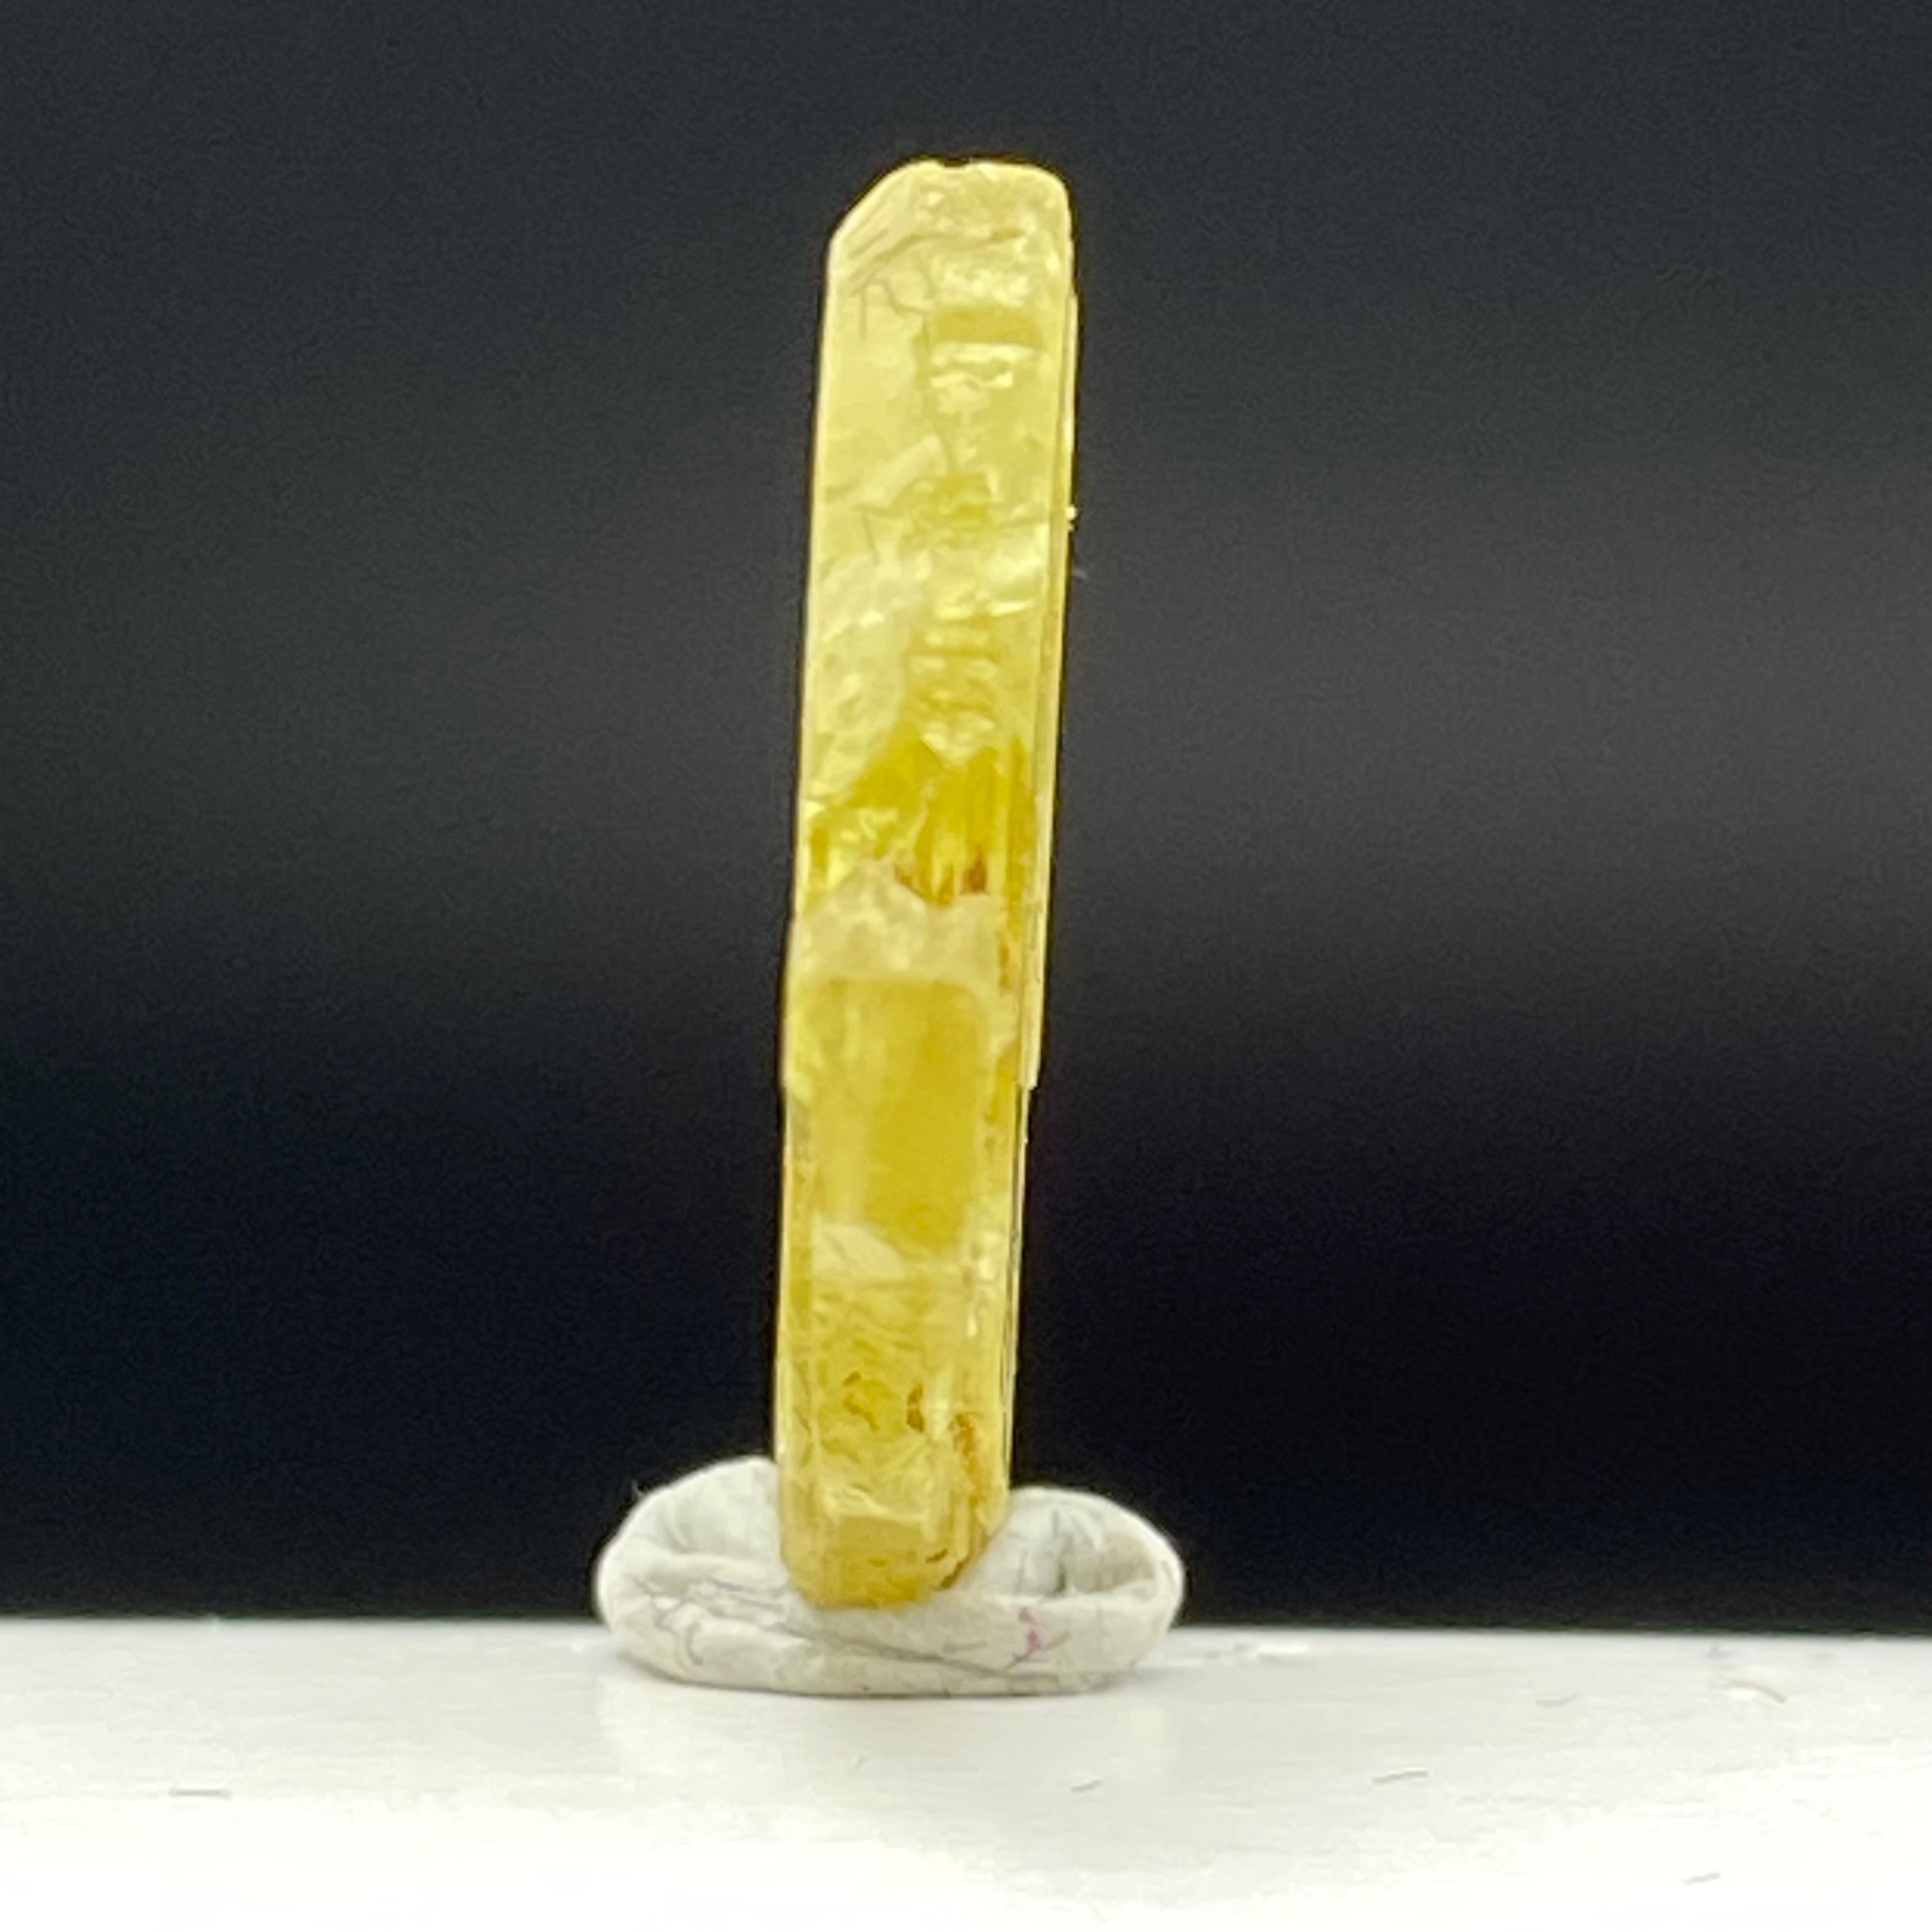 Chrysoberyl Crystal - 082